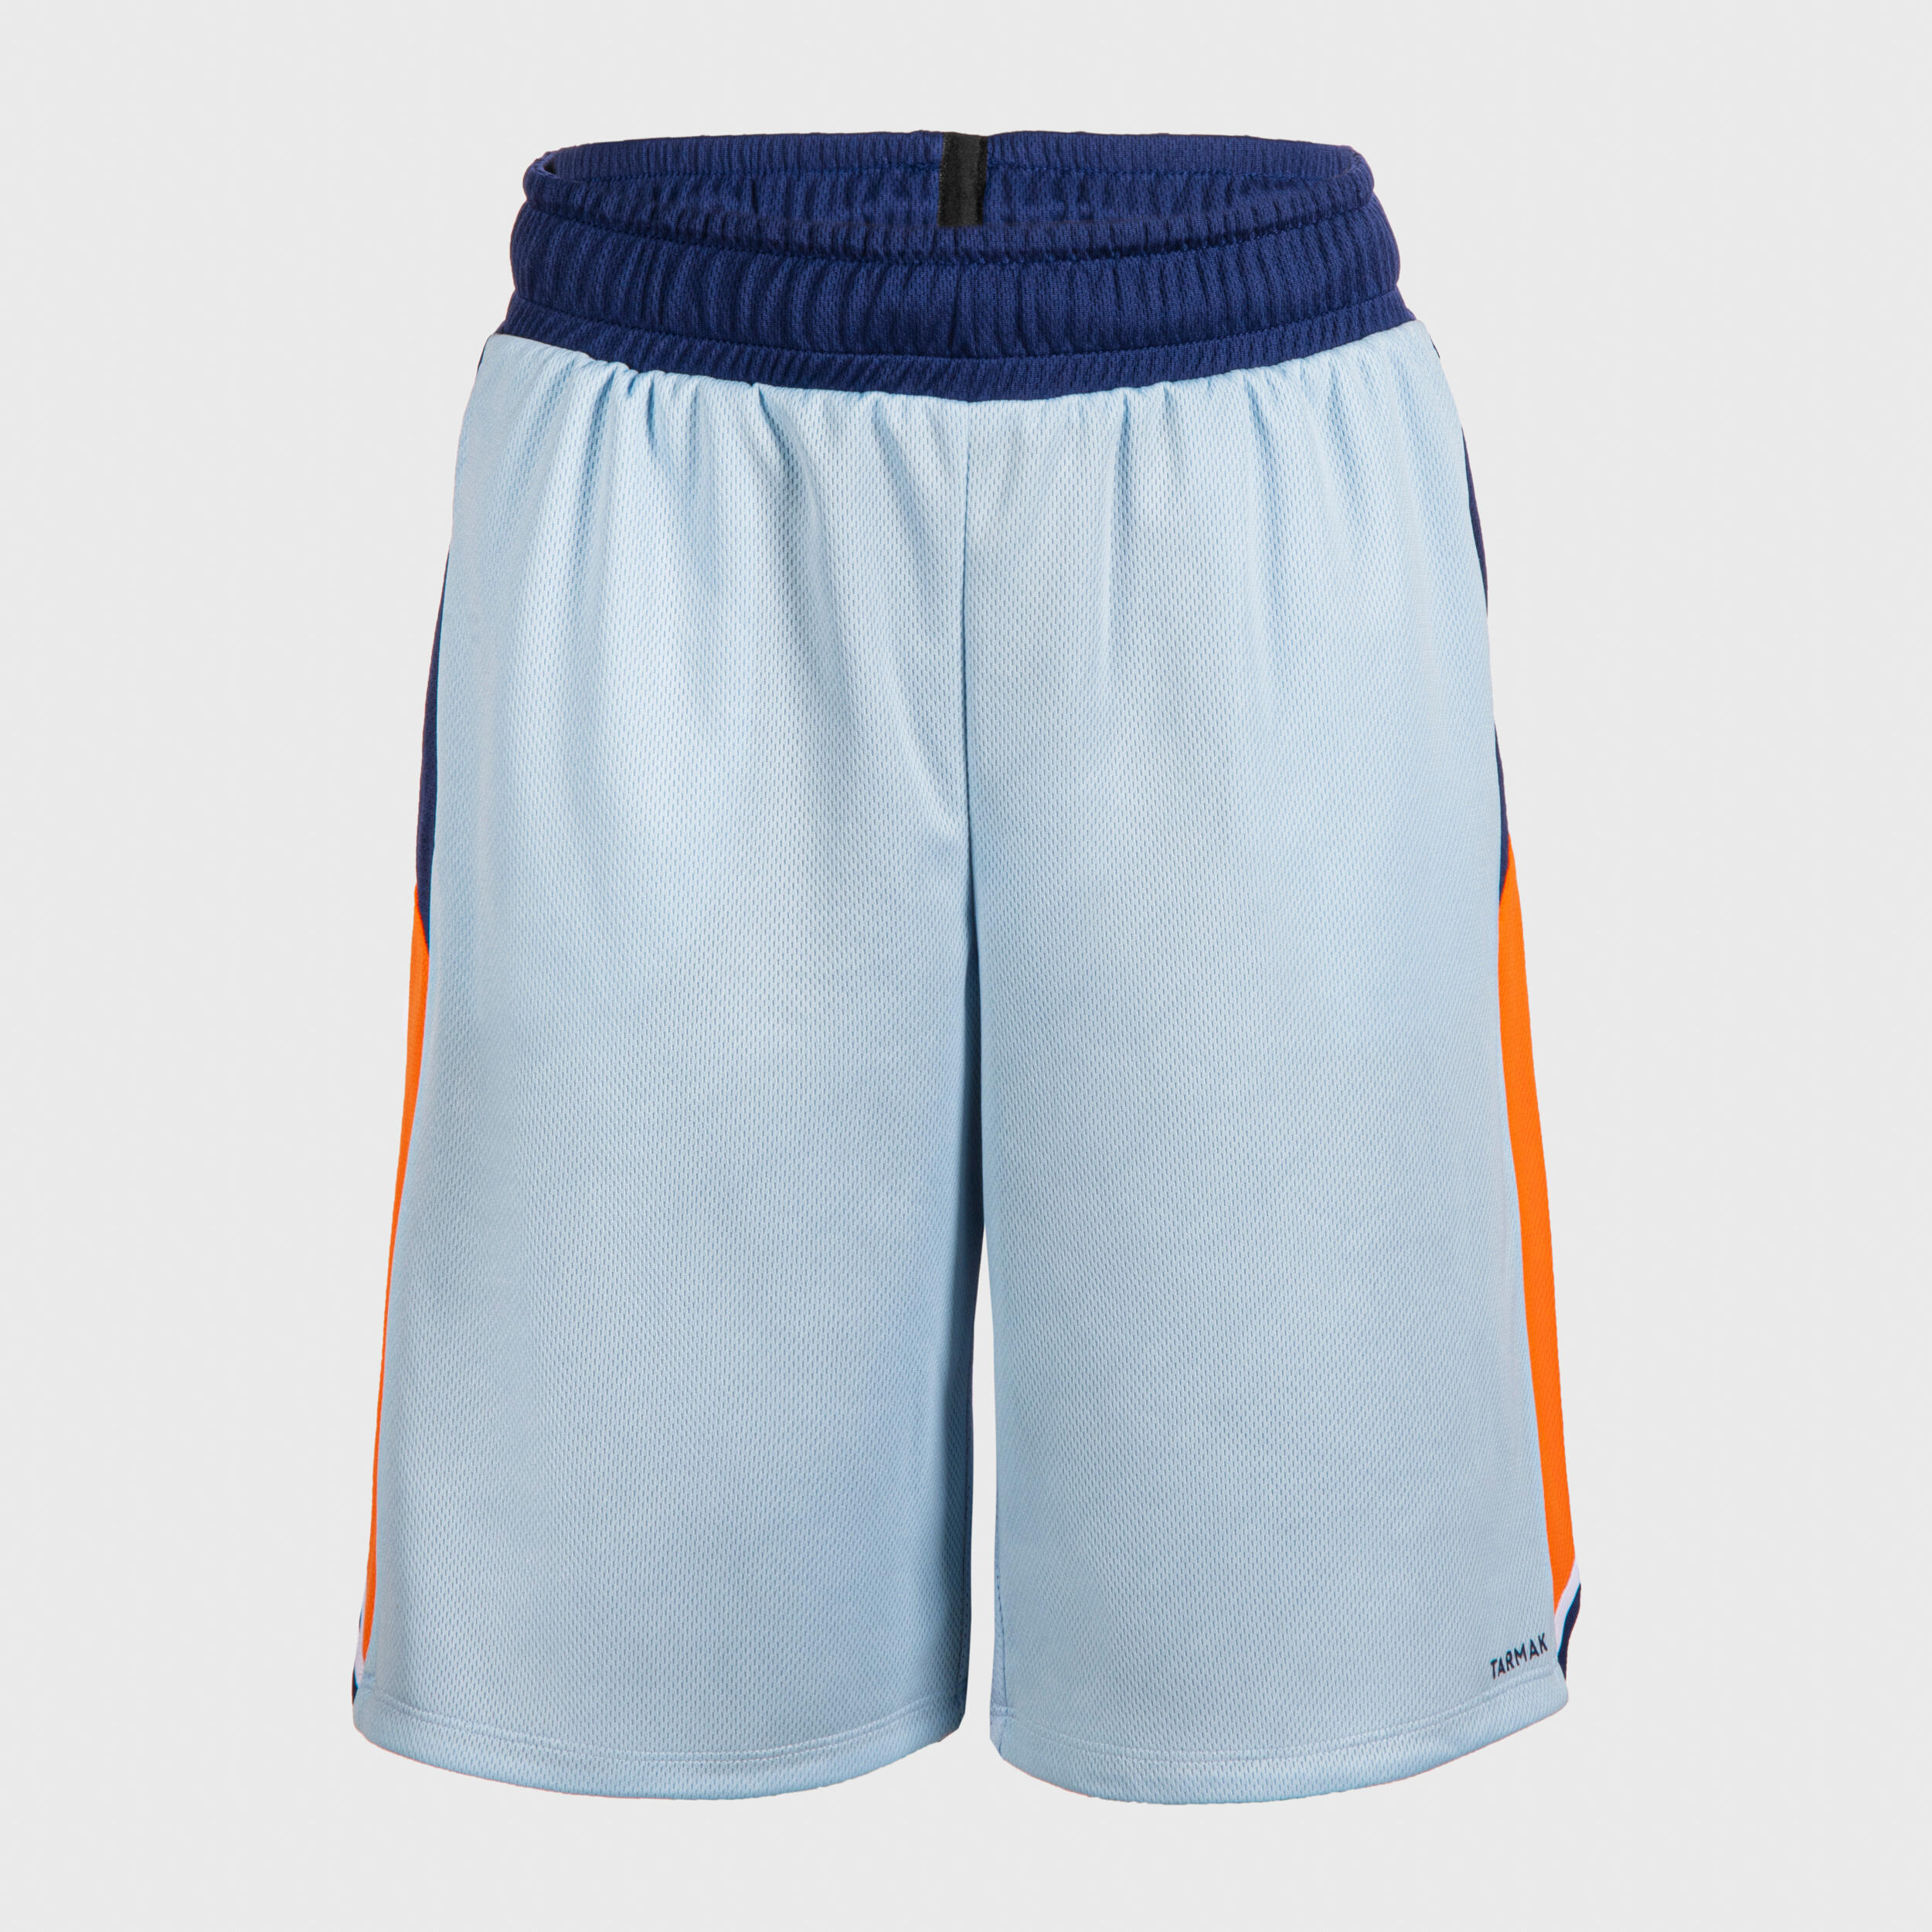 Kids' Reversible Basketball Shorts SH500R - Light Blue/Navy 6/11